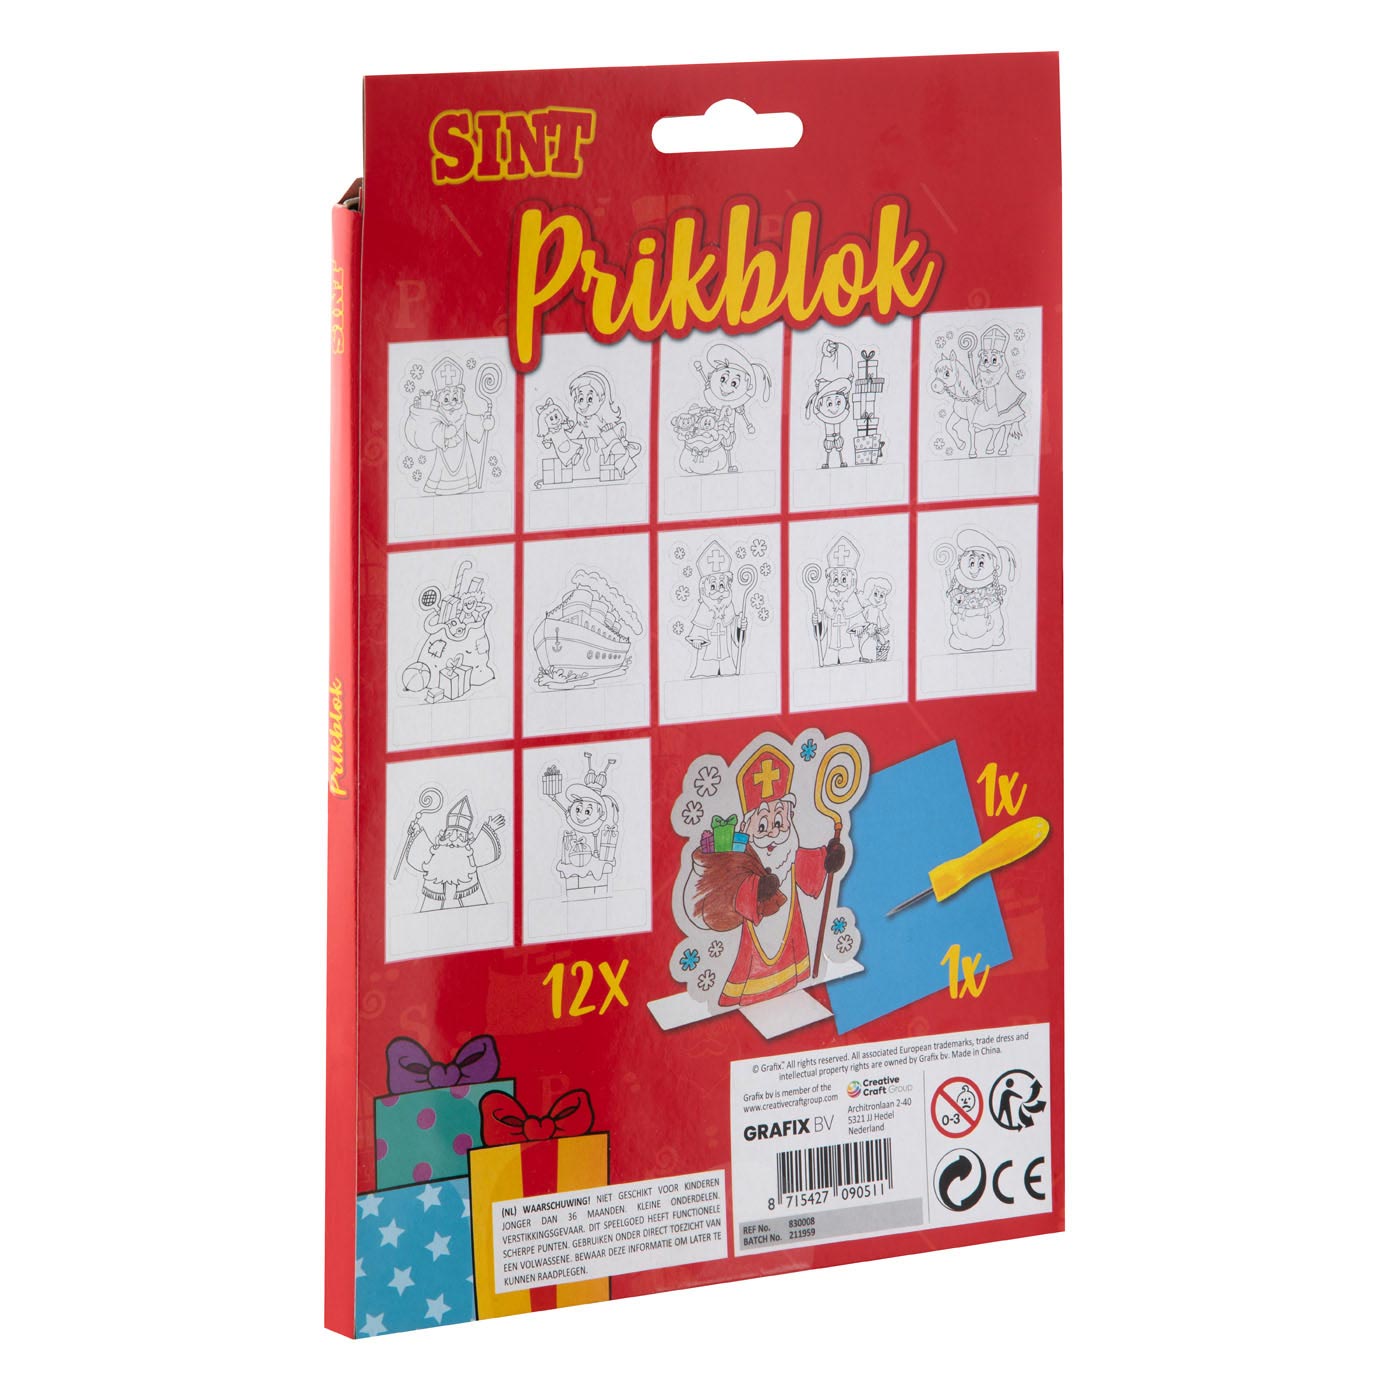 Sinterklaas Prikblok met 12 sheets